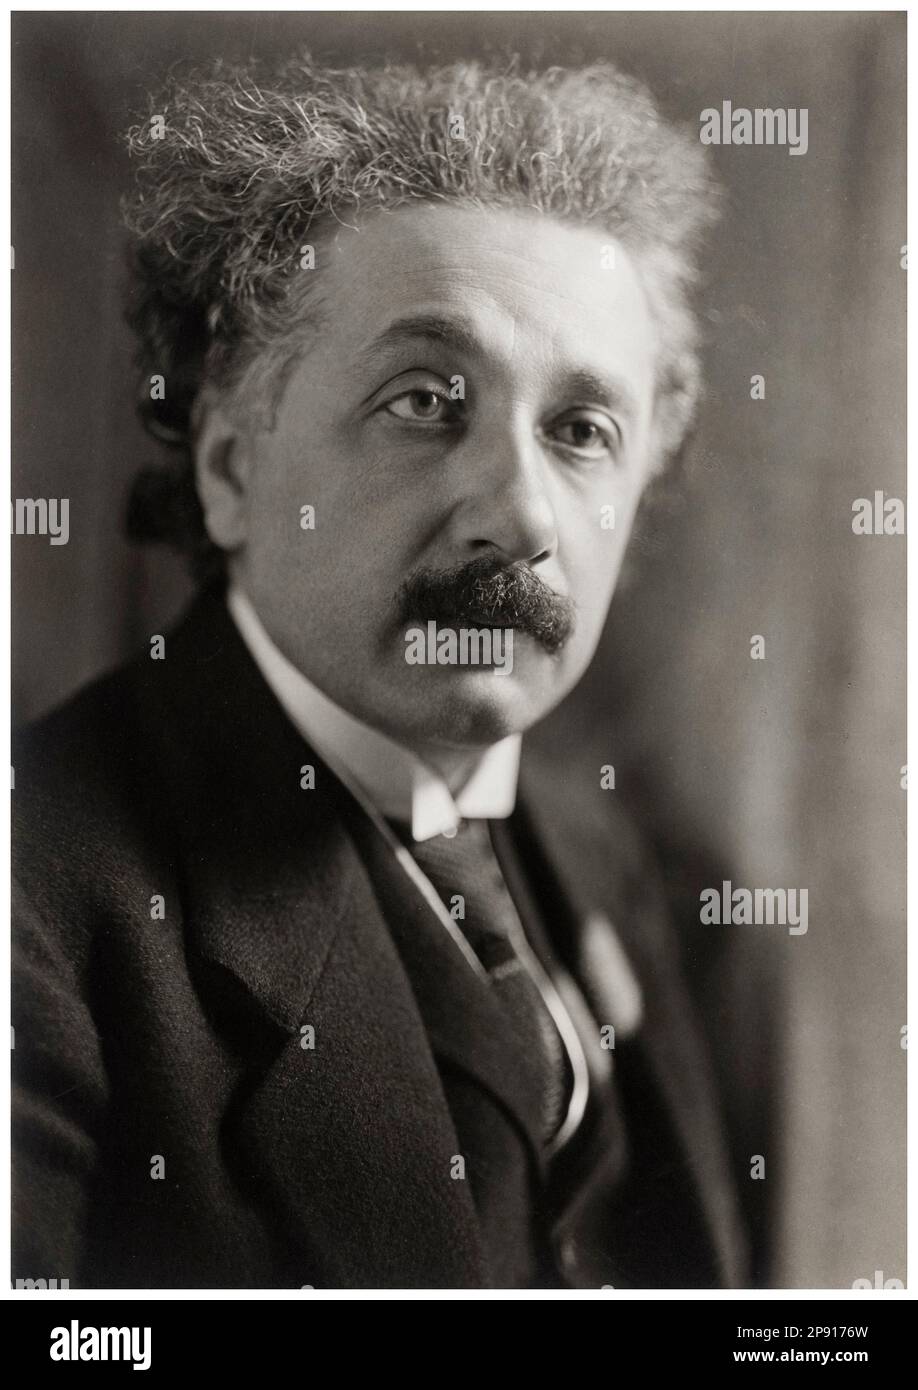 Albert Einstein (1879-1955), German born theoretical physicist, portrait photograph by Harris & Ewing Studio, 1921 Stock Photo